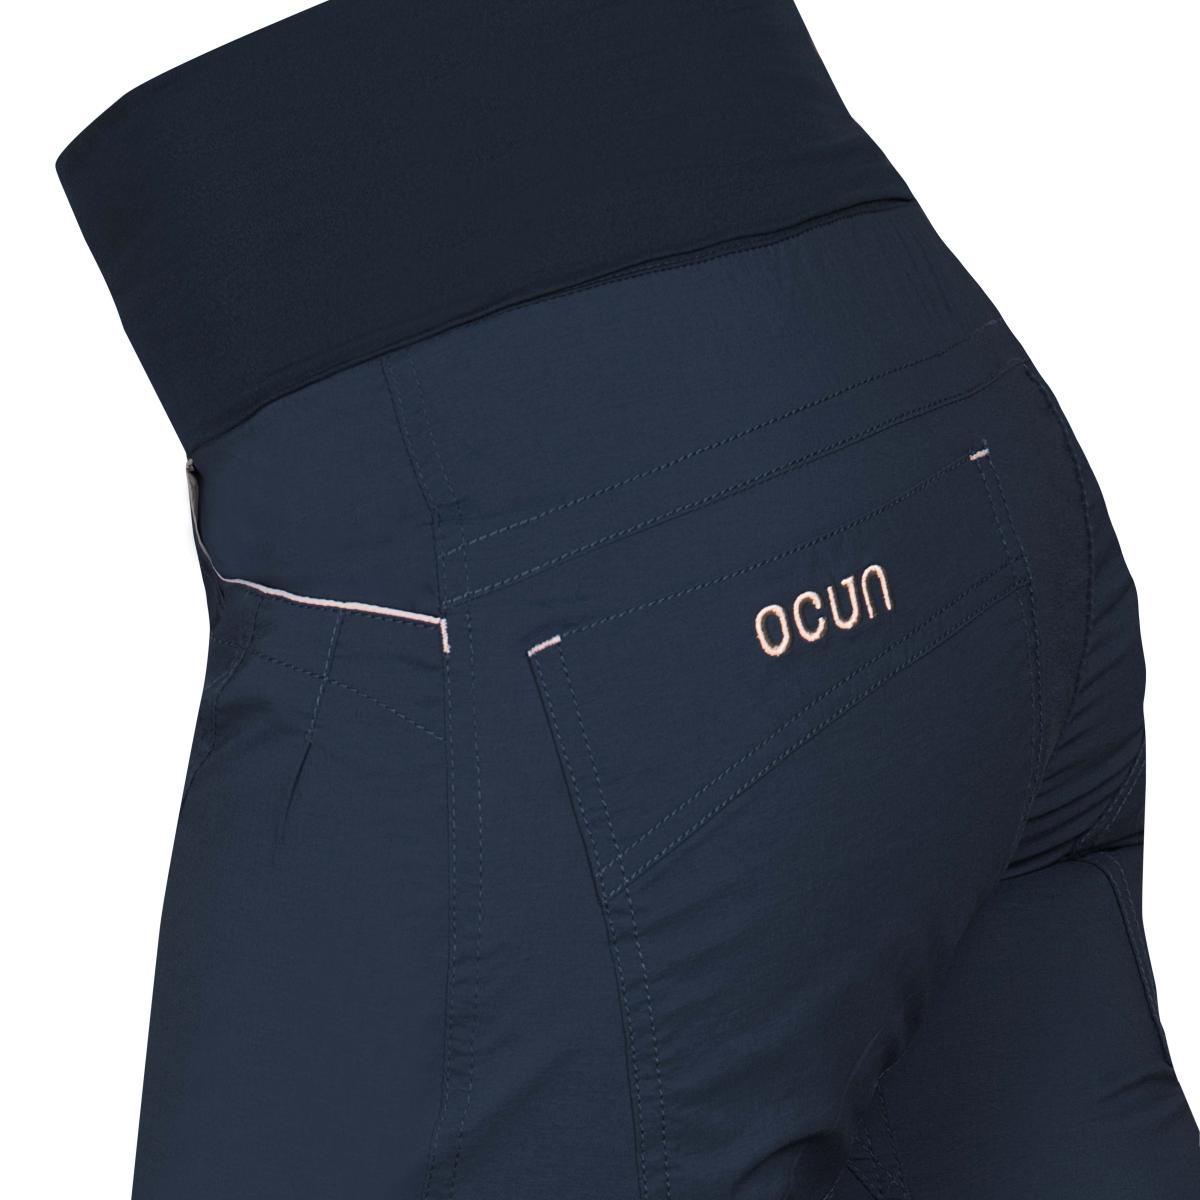 3/4-Damen-Kletterhose Noya Eco Shorts